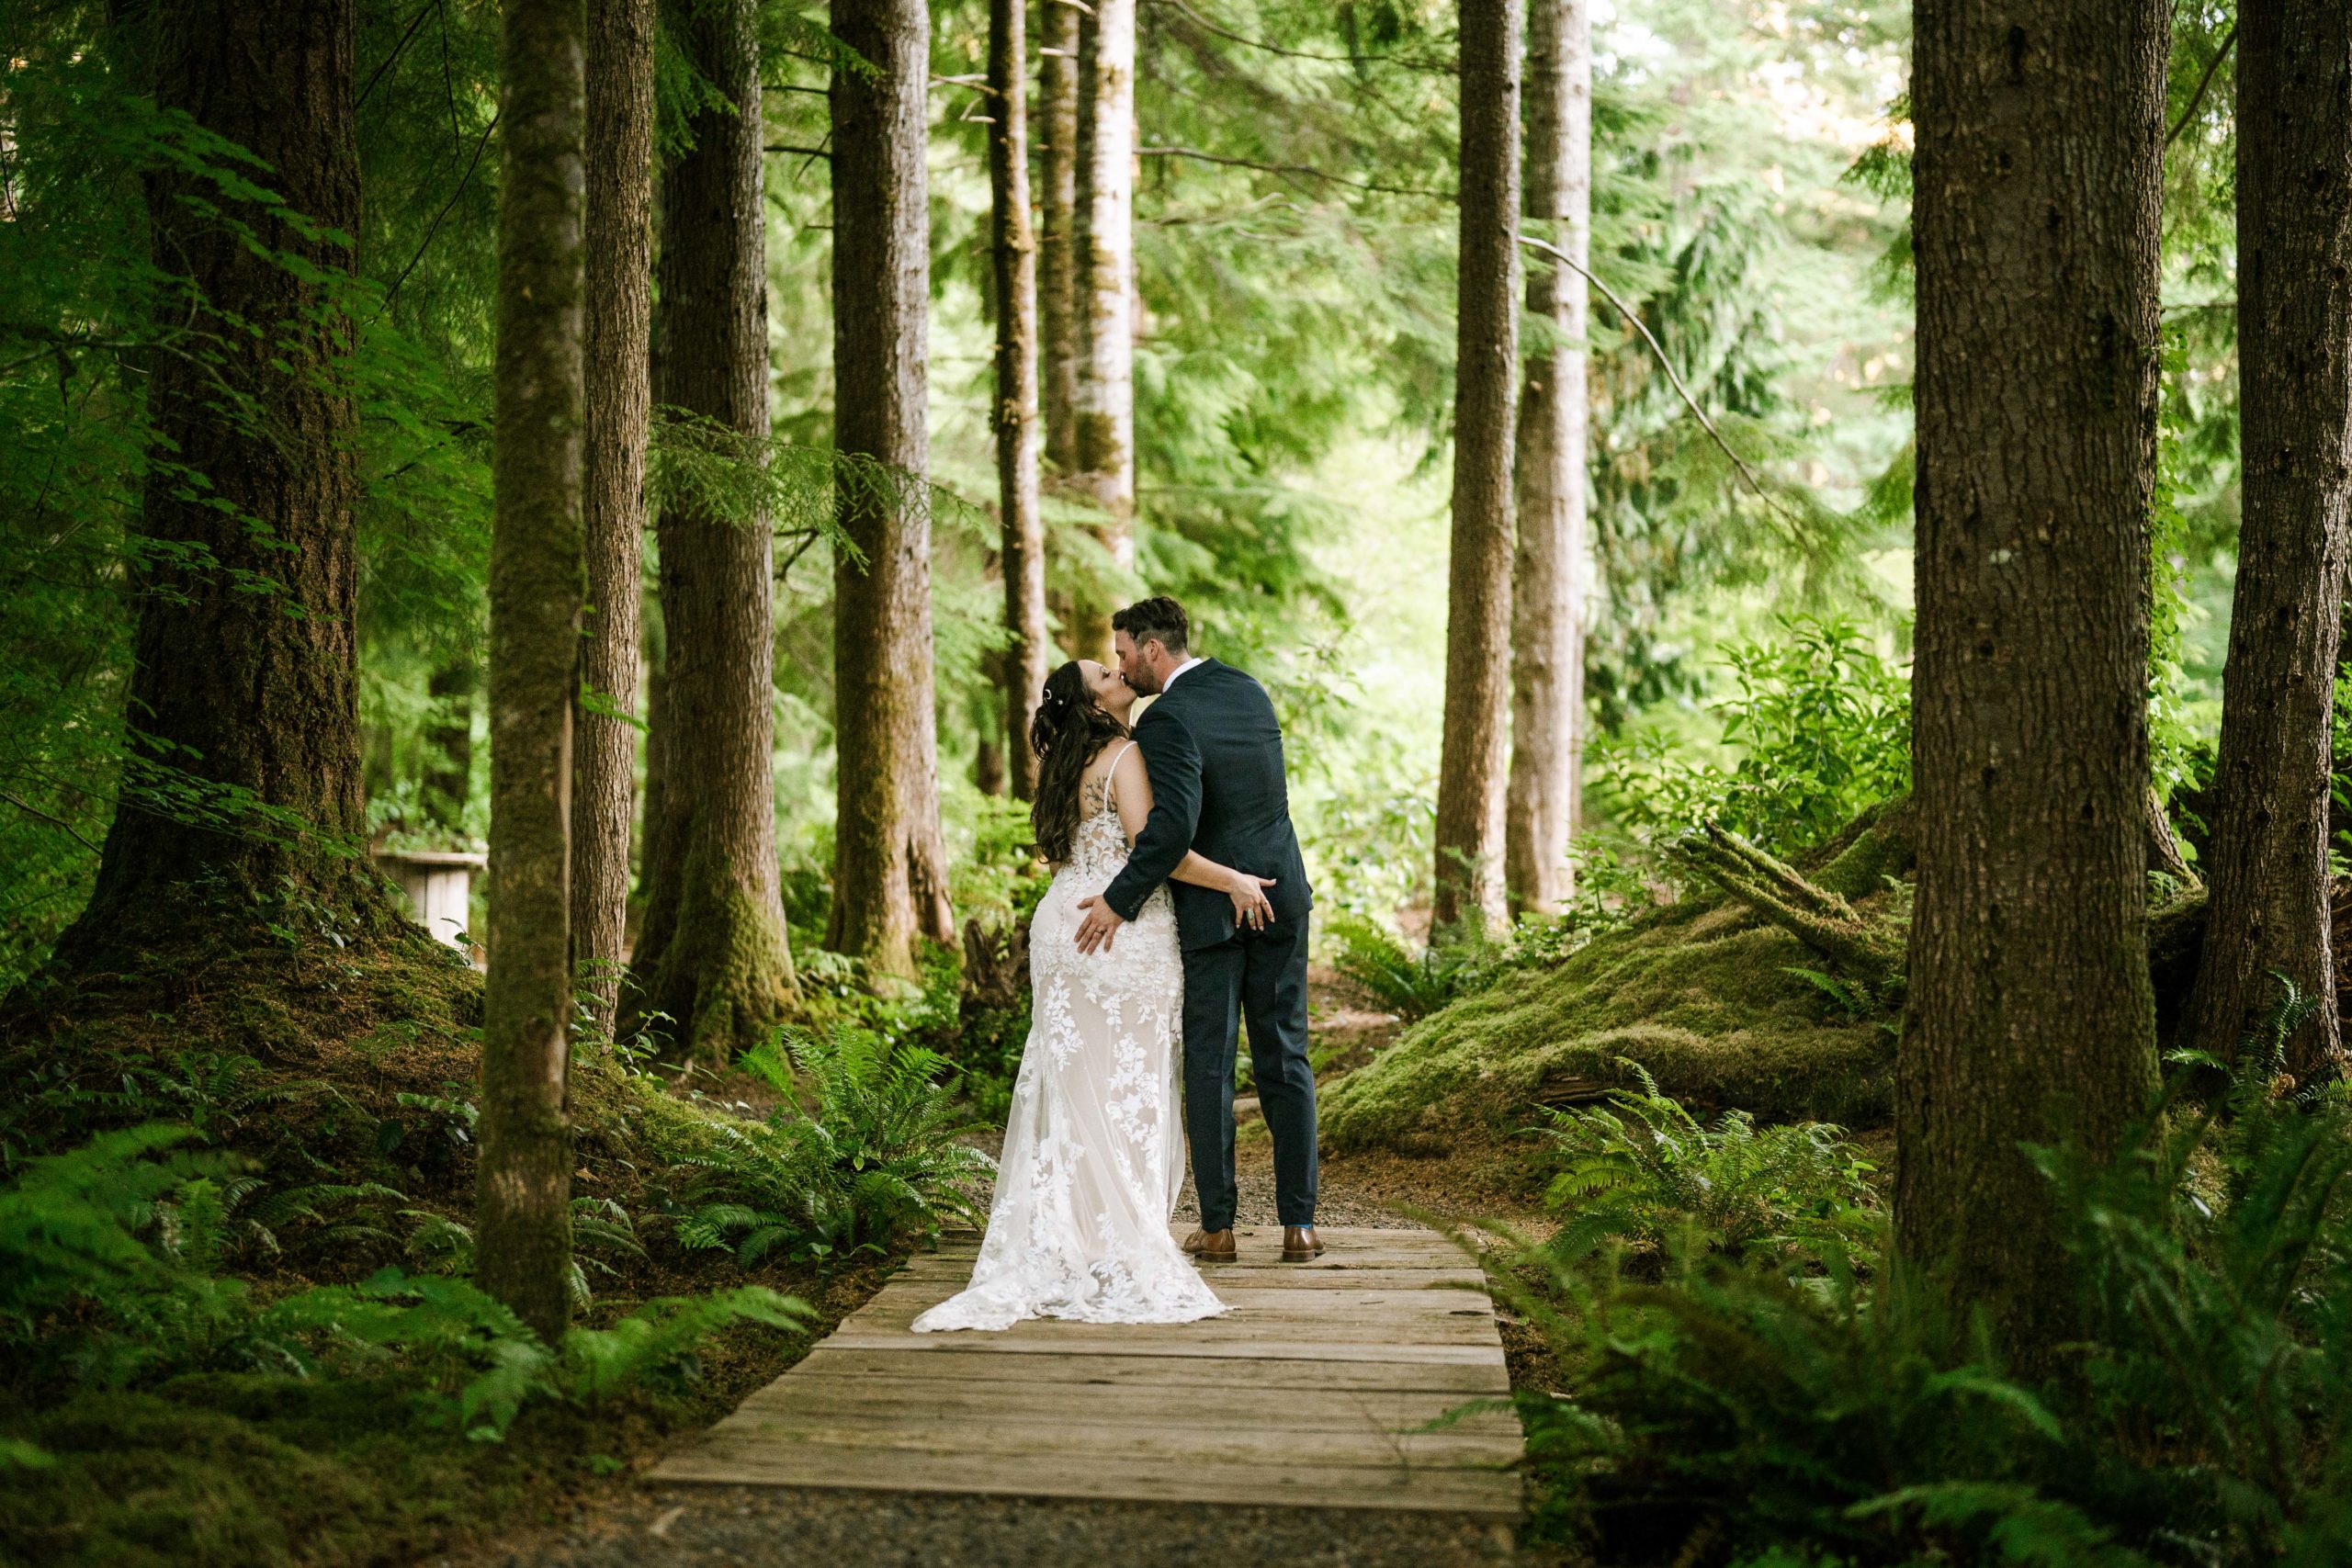 Beautiful Forest Wedding in Forks, Washington